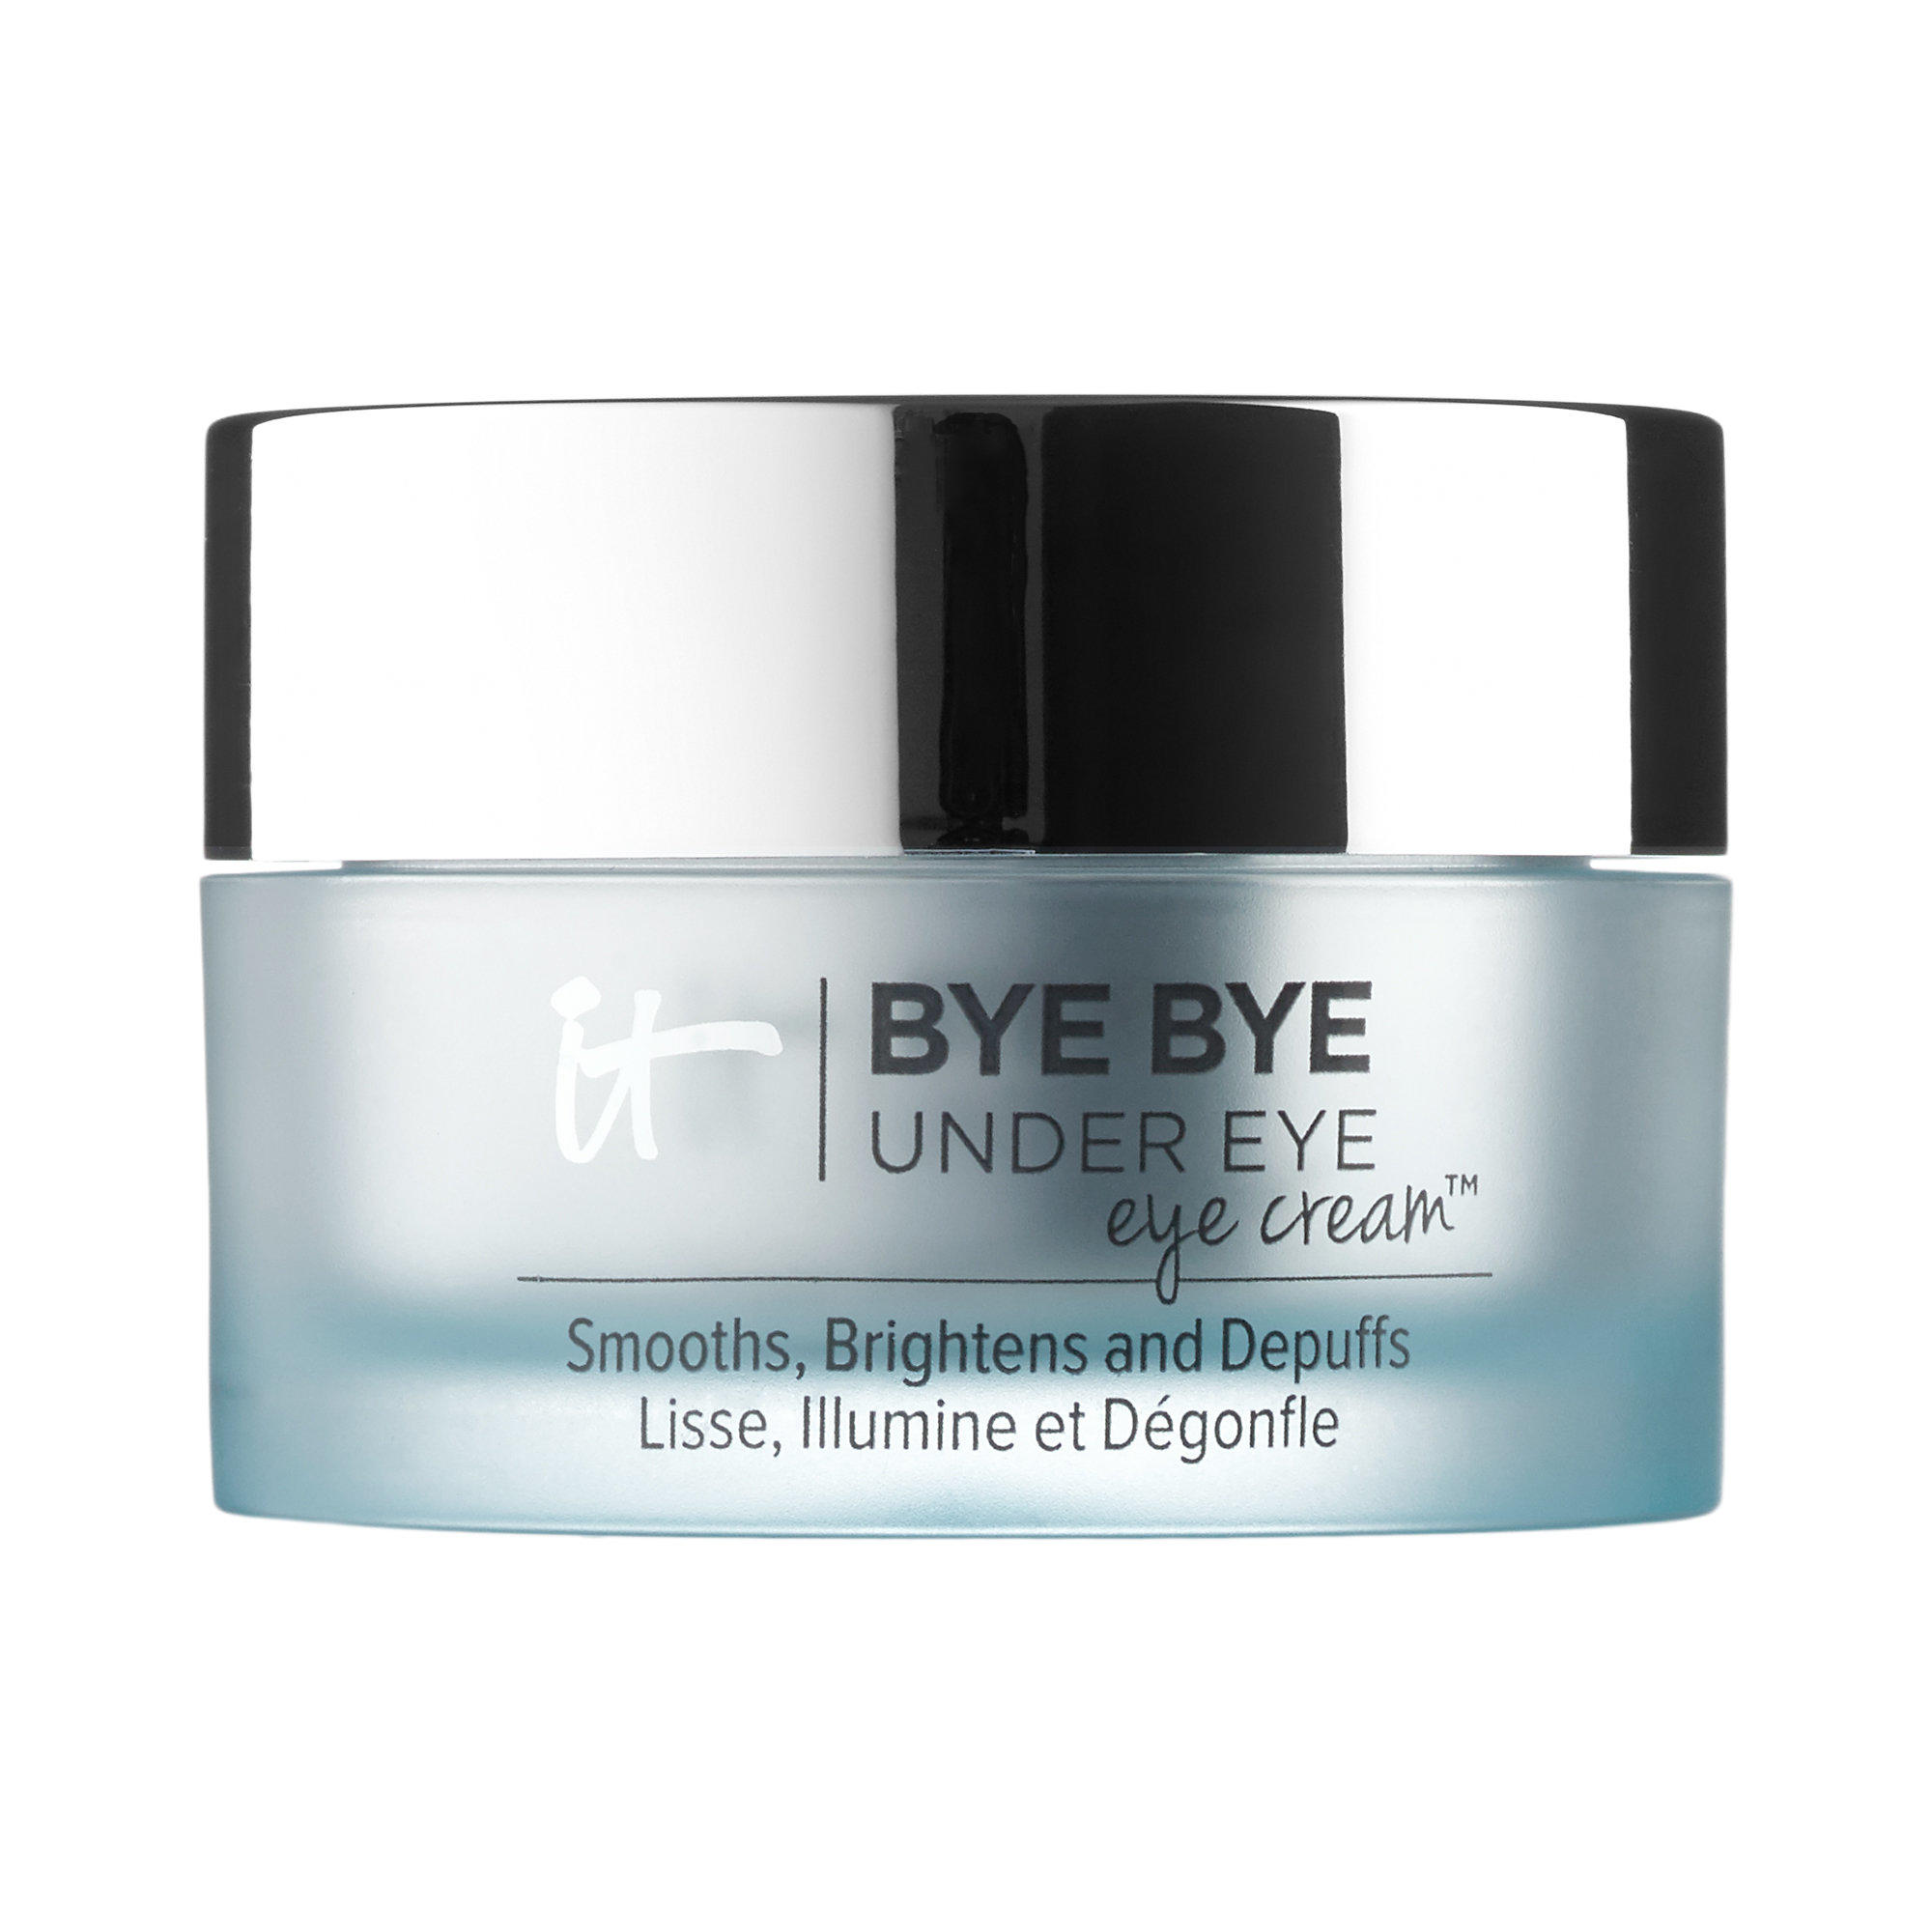 IT Cosmetics Bye Bye Under Eye Cream